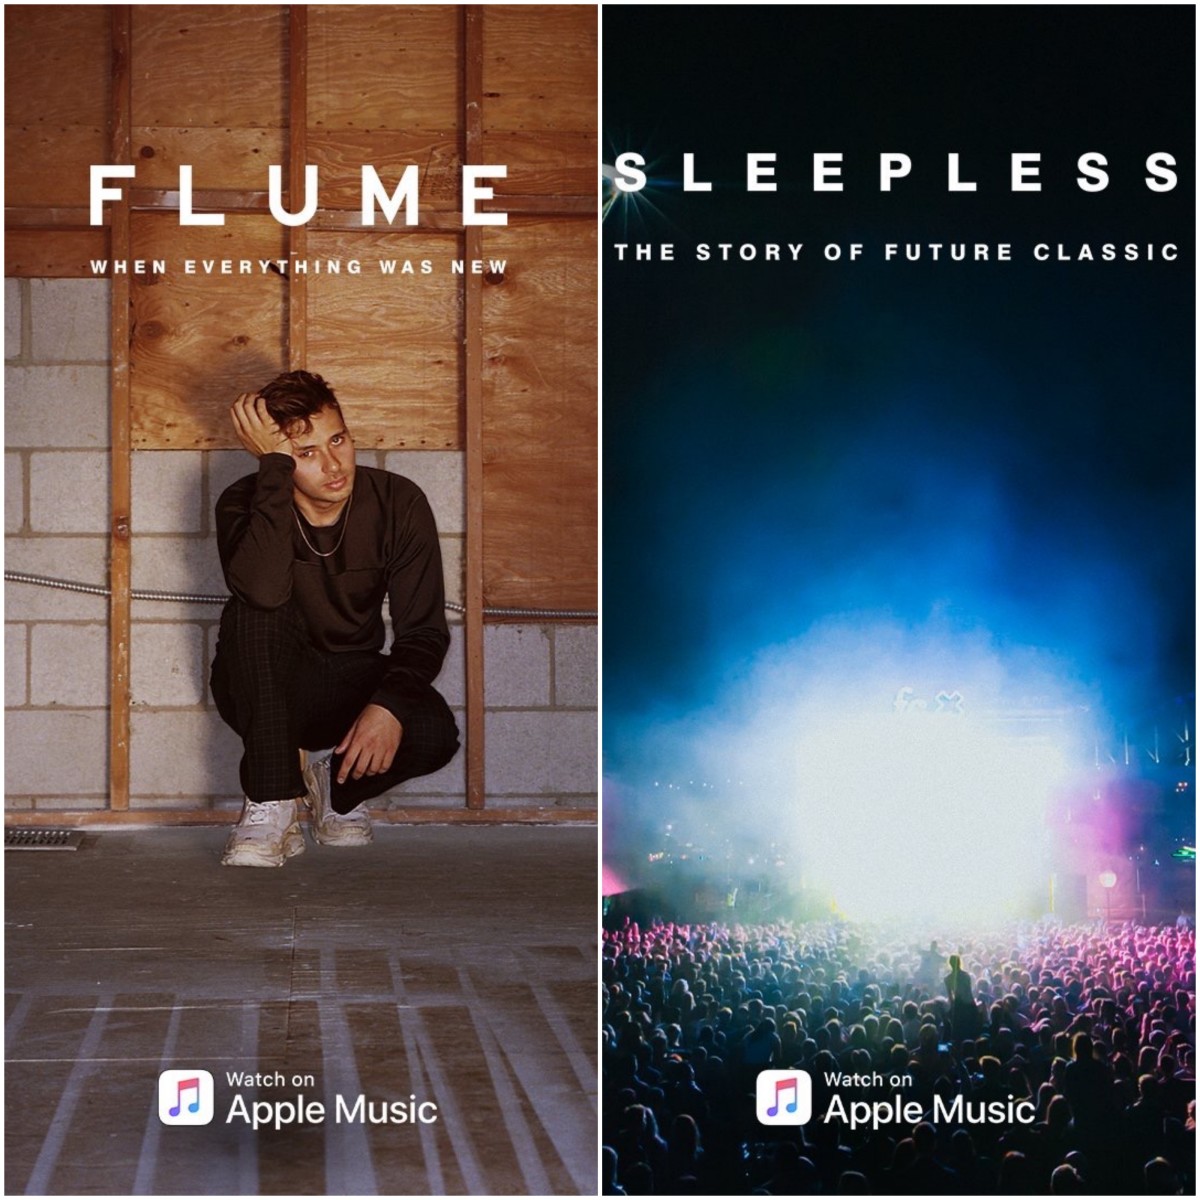 flume palaces album